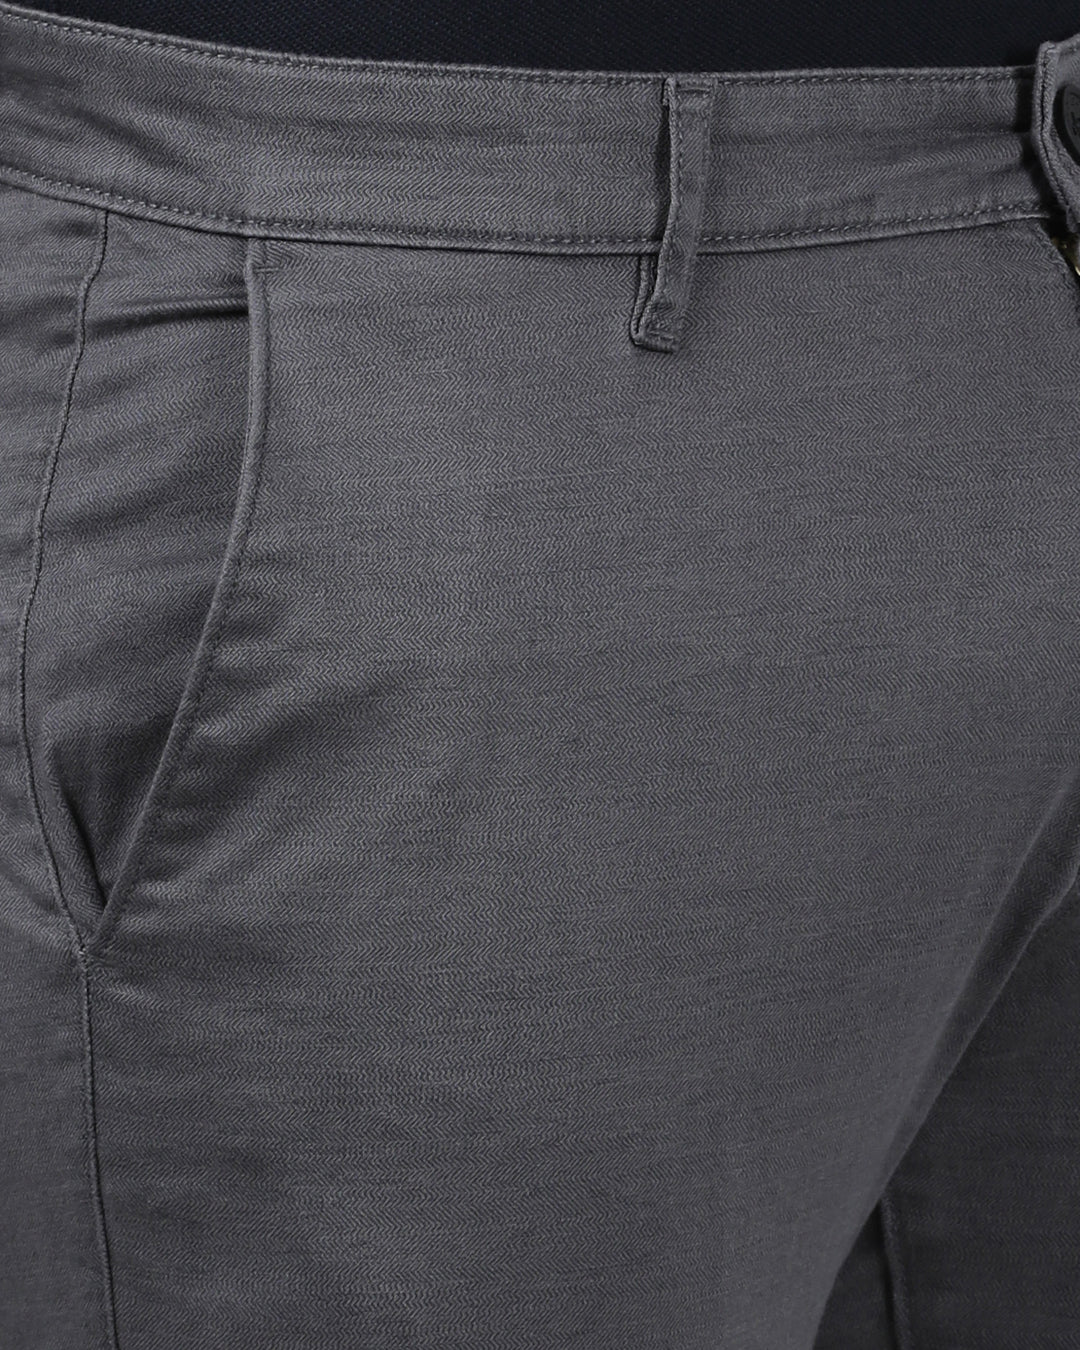 Casual Slim Fit Printed Grey Trousers for Men